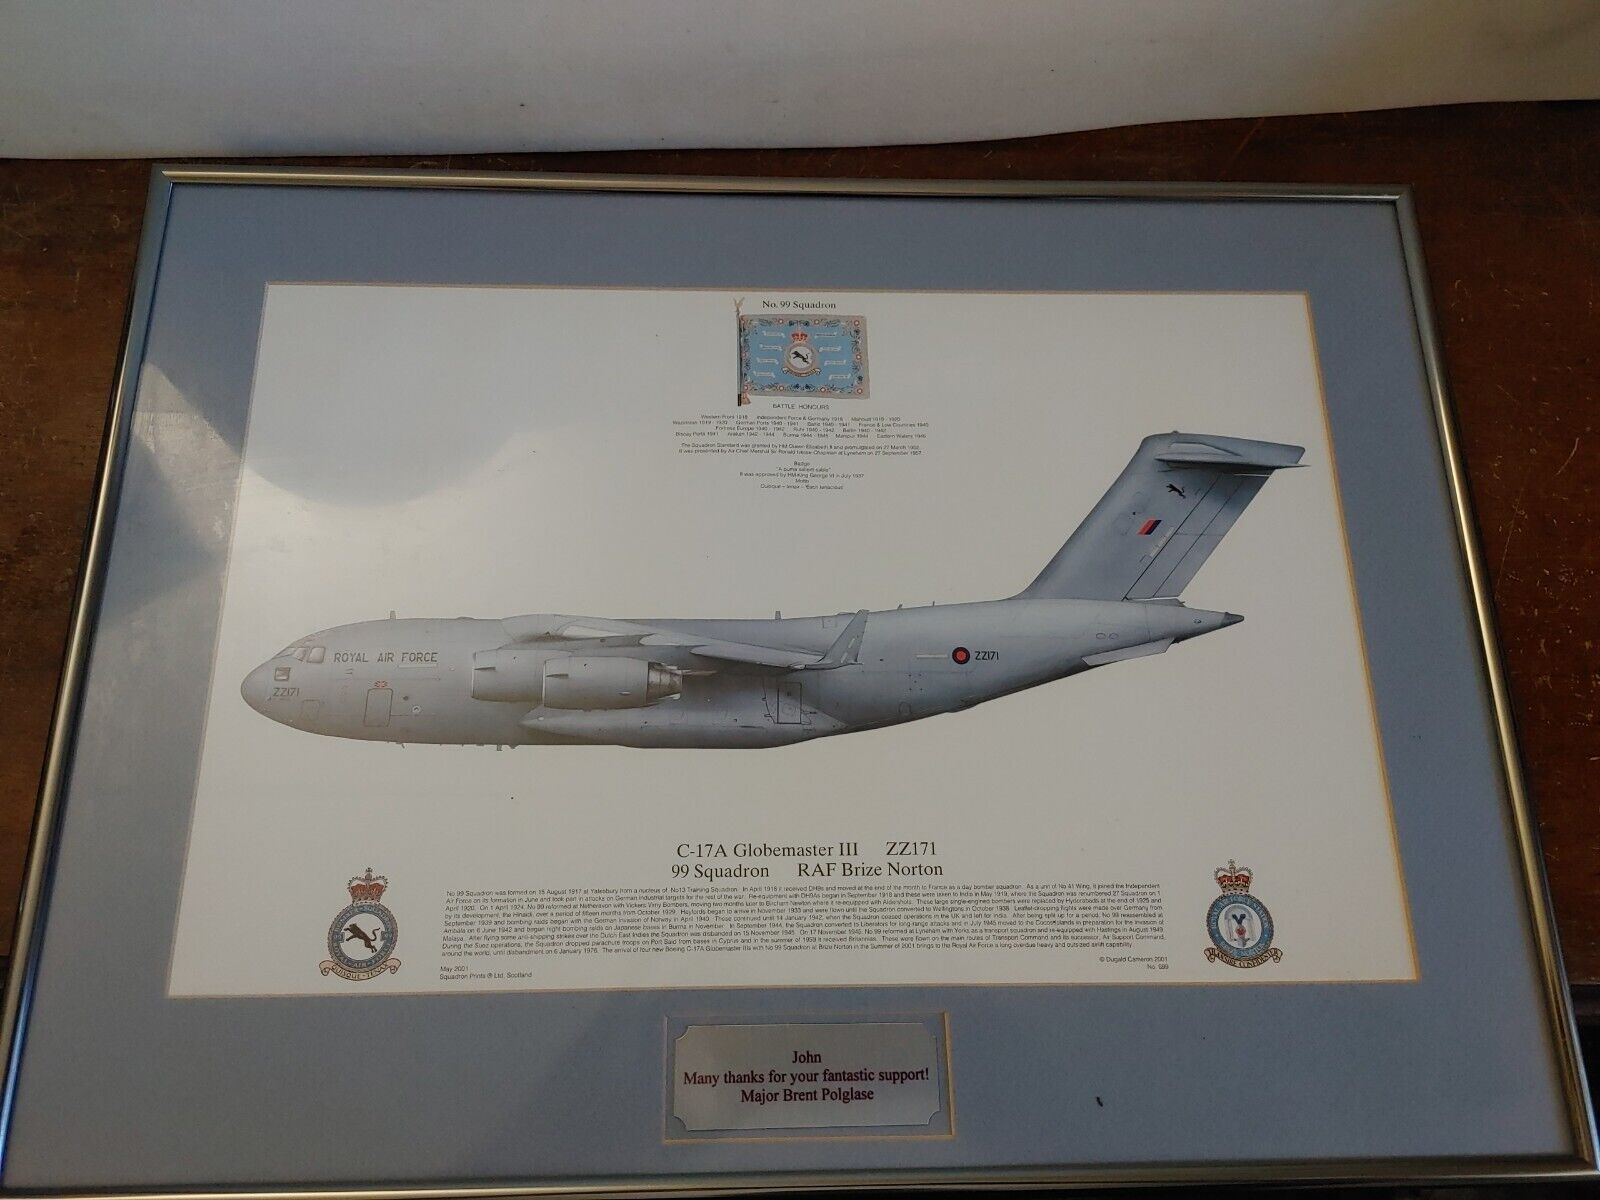 Framed Dugald Cameron RAF C-17A Globemaster III 99 Squadron Plaque